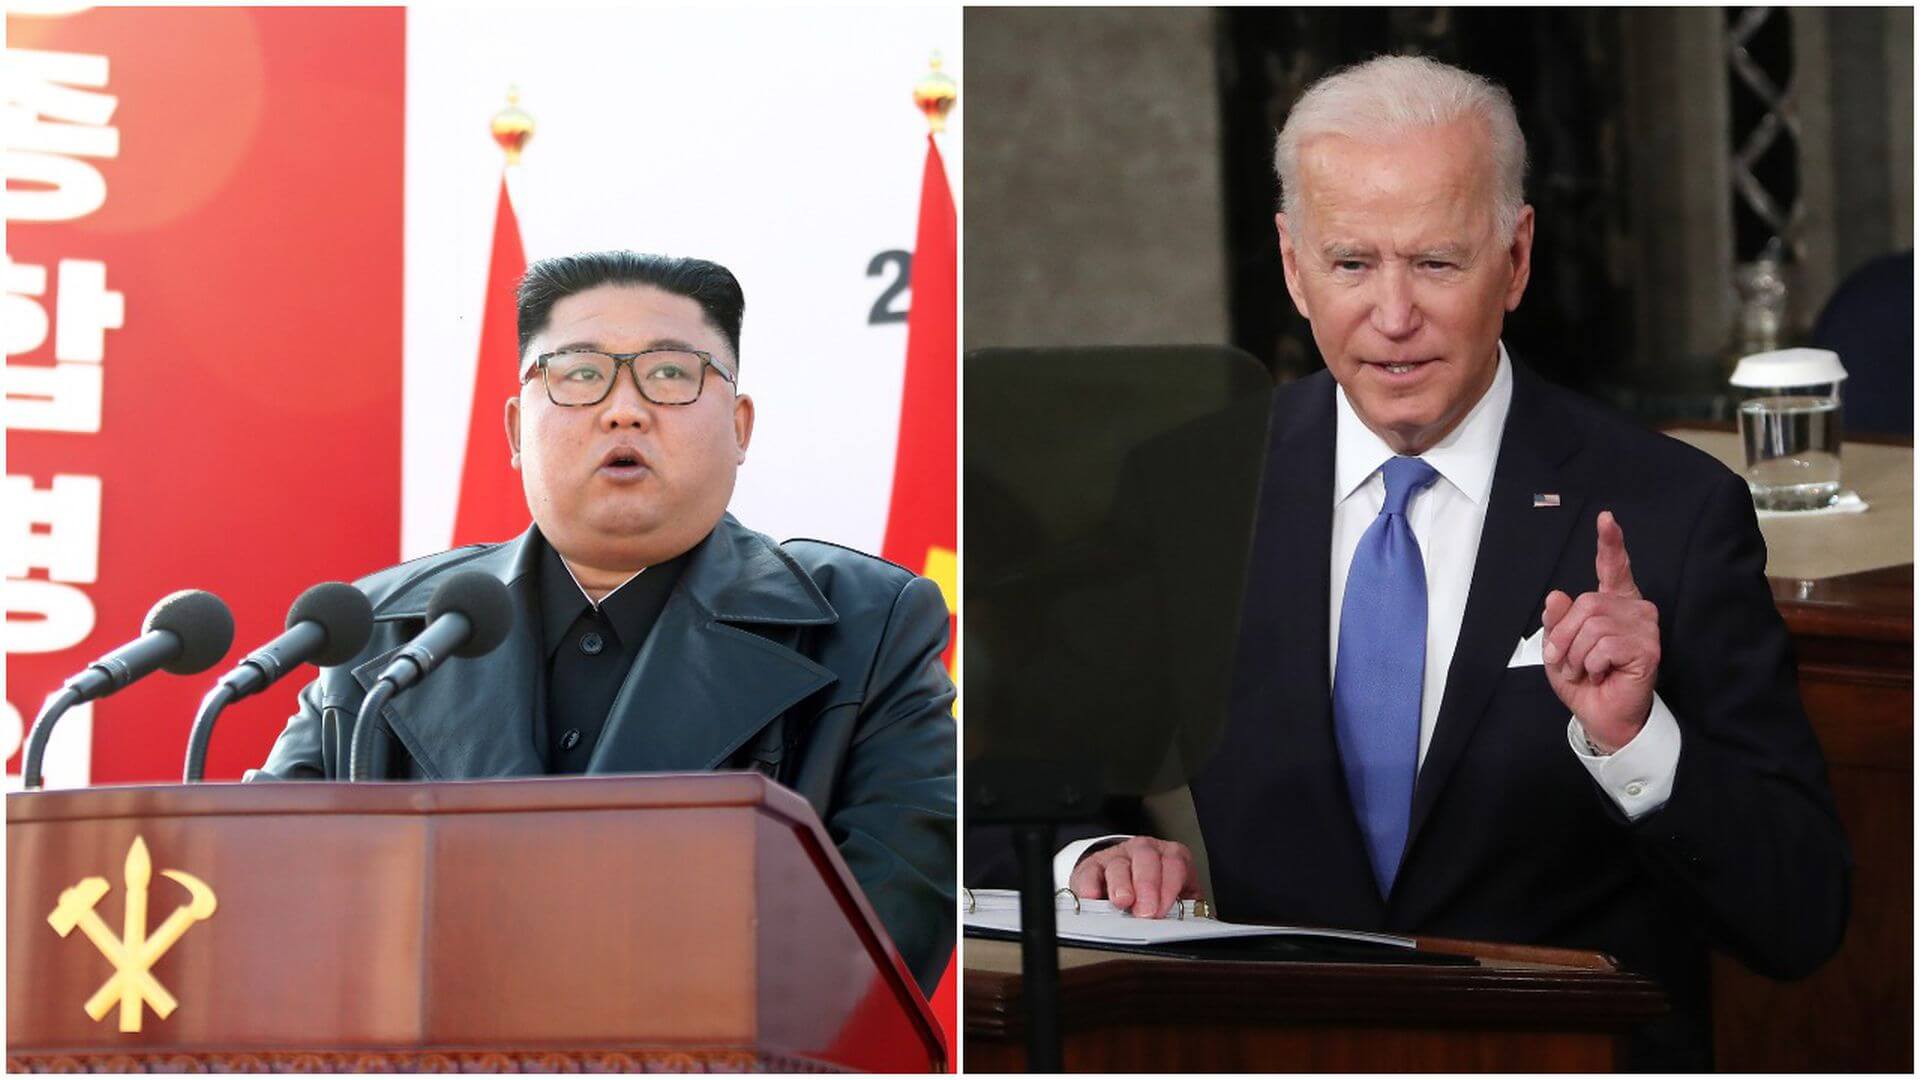 North Korea Warns US of “Very Grave Situation” Following Biden’s Speech